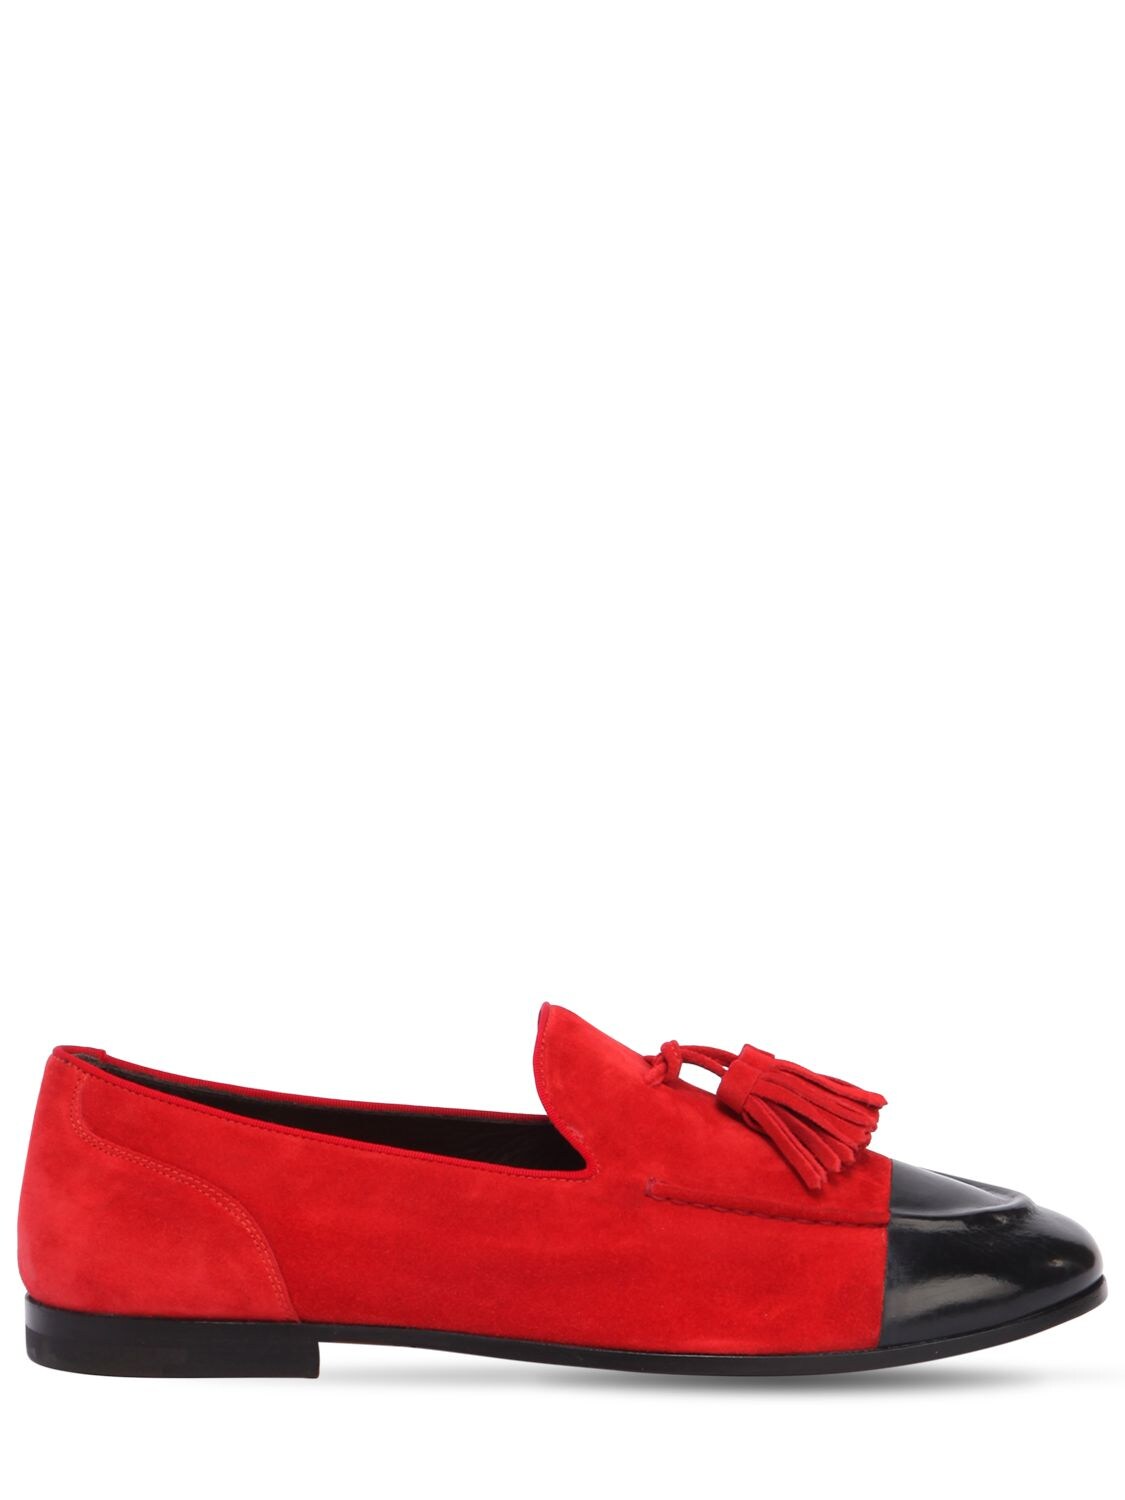 Alberto Fasciani Leather & Suede Loafers W/ Tassels In Red